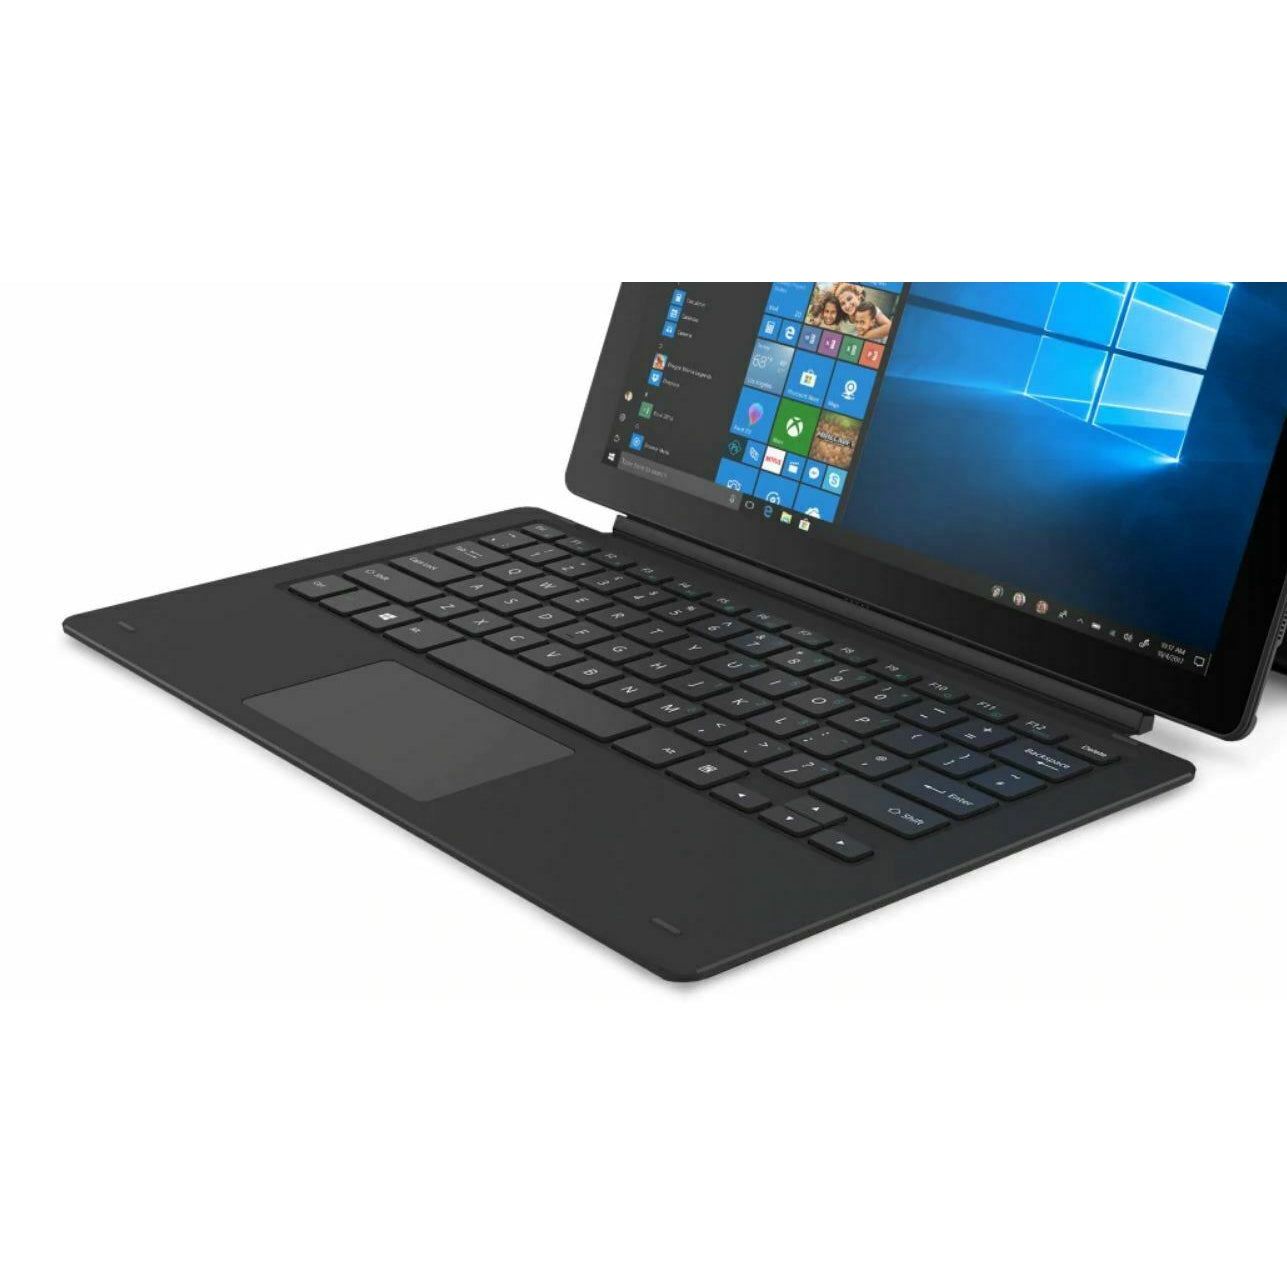 Linx 12X64 12.5 Full HD 2 in 1 Laptop Tablet with Keyboard 4GB RAM 64GB Win 10